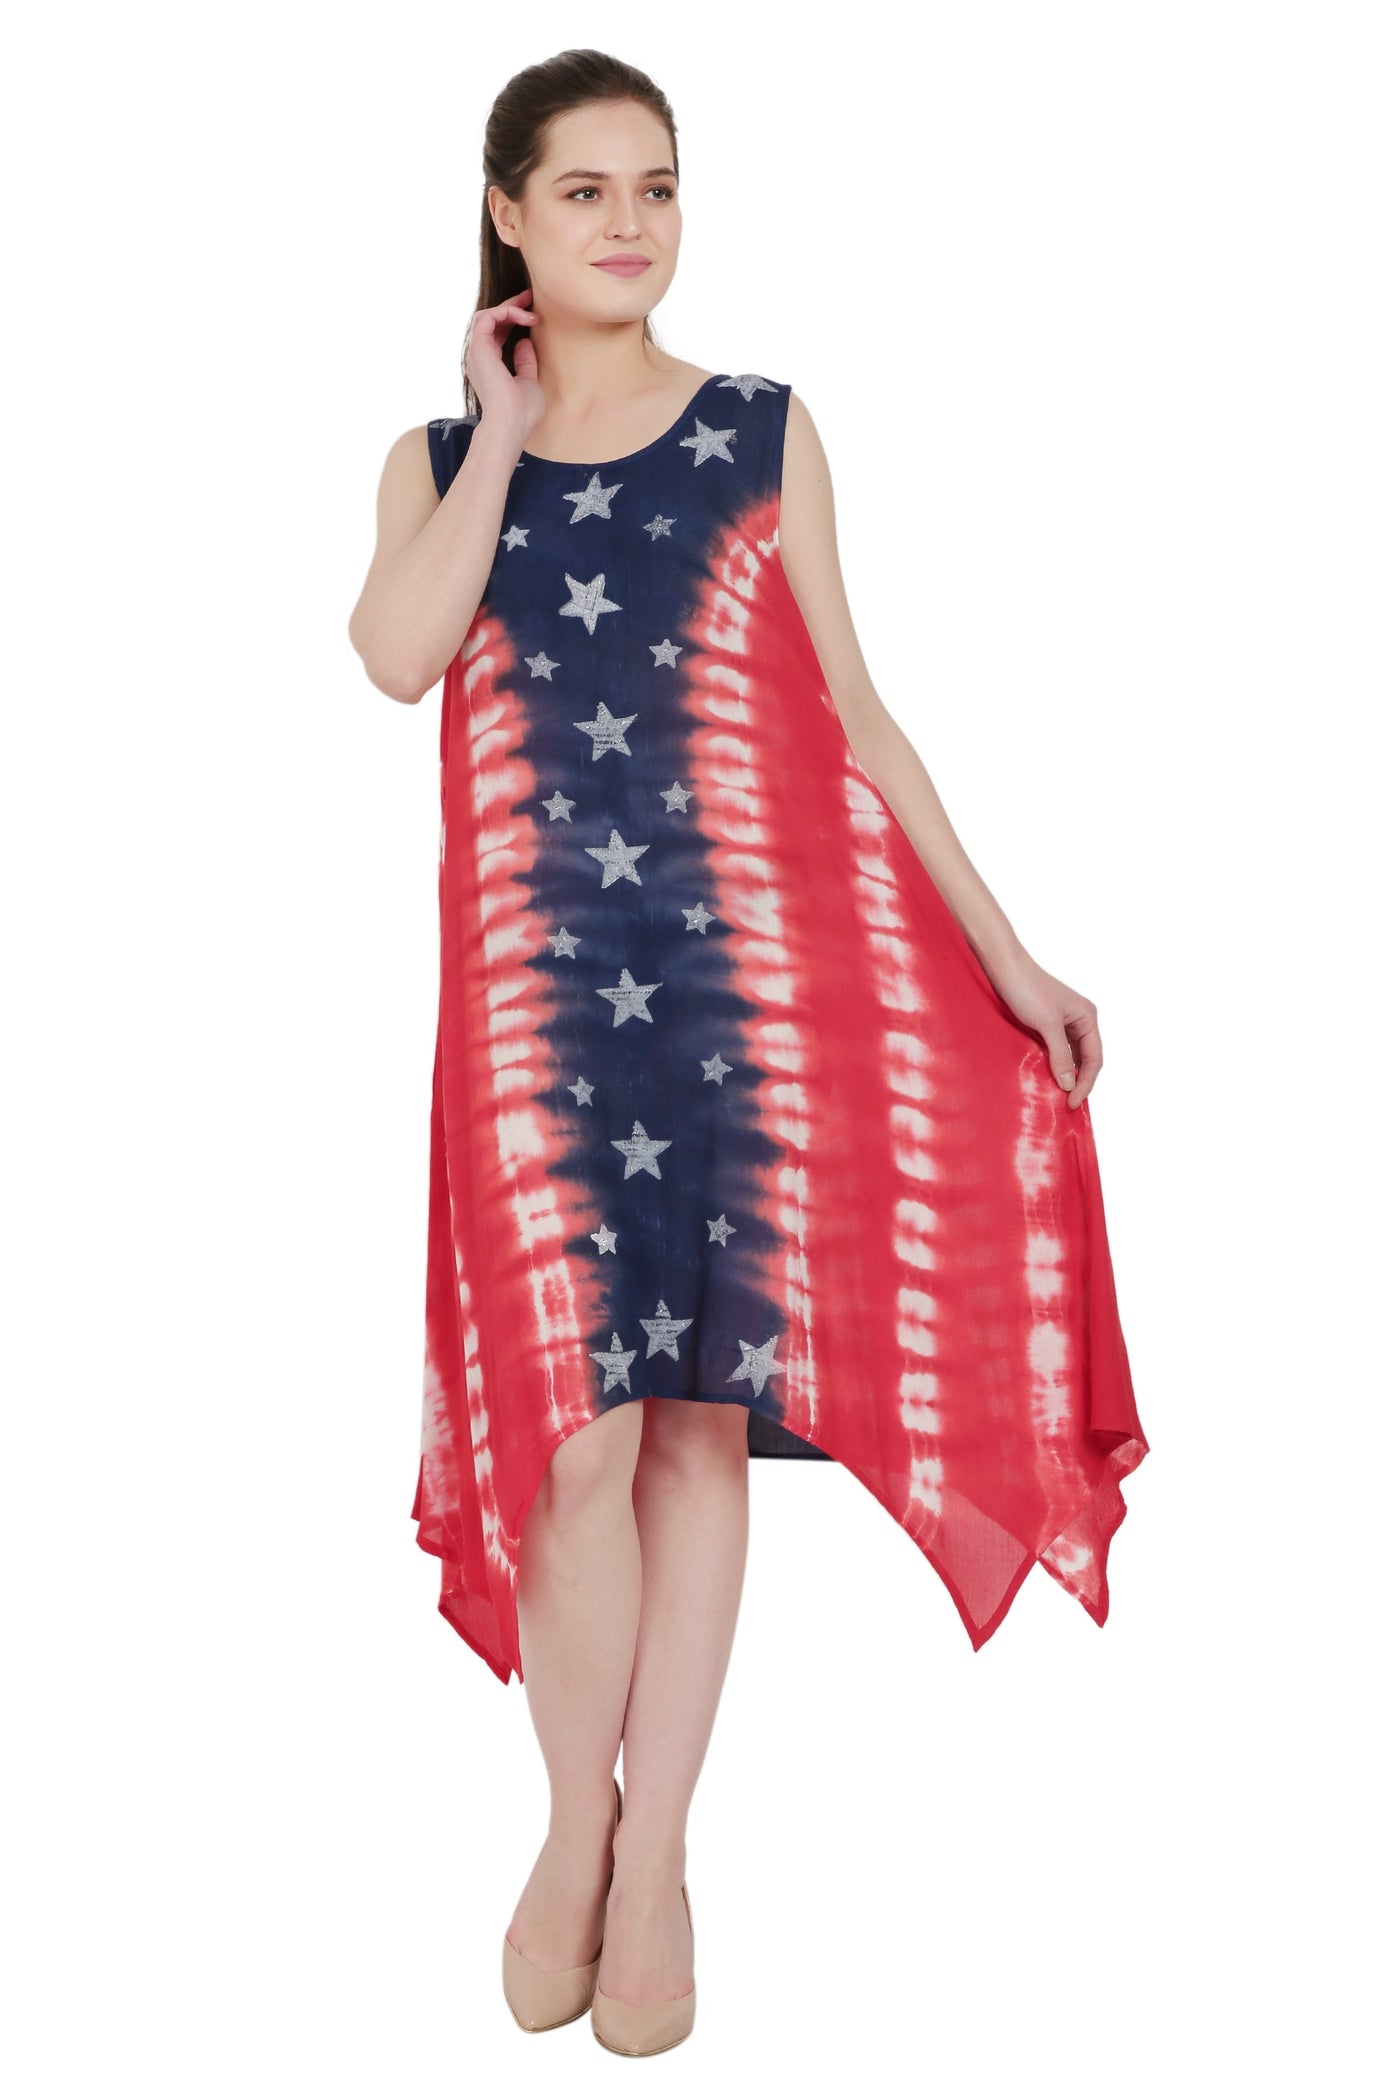 Fairytale Bottom Americana Dress UD46-2802